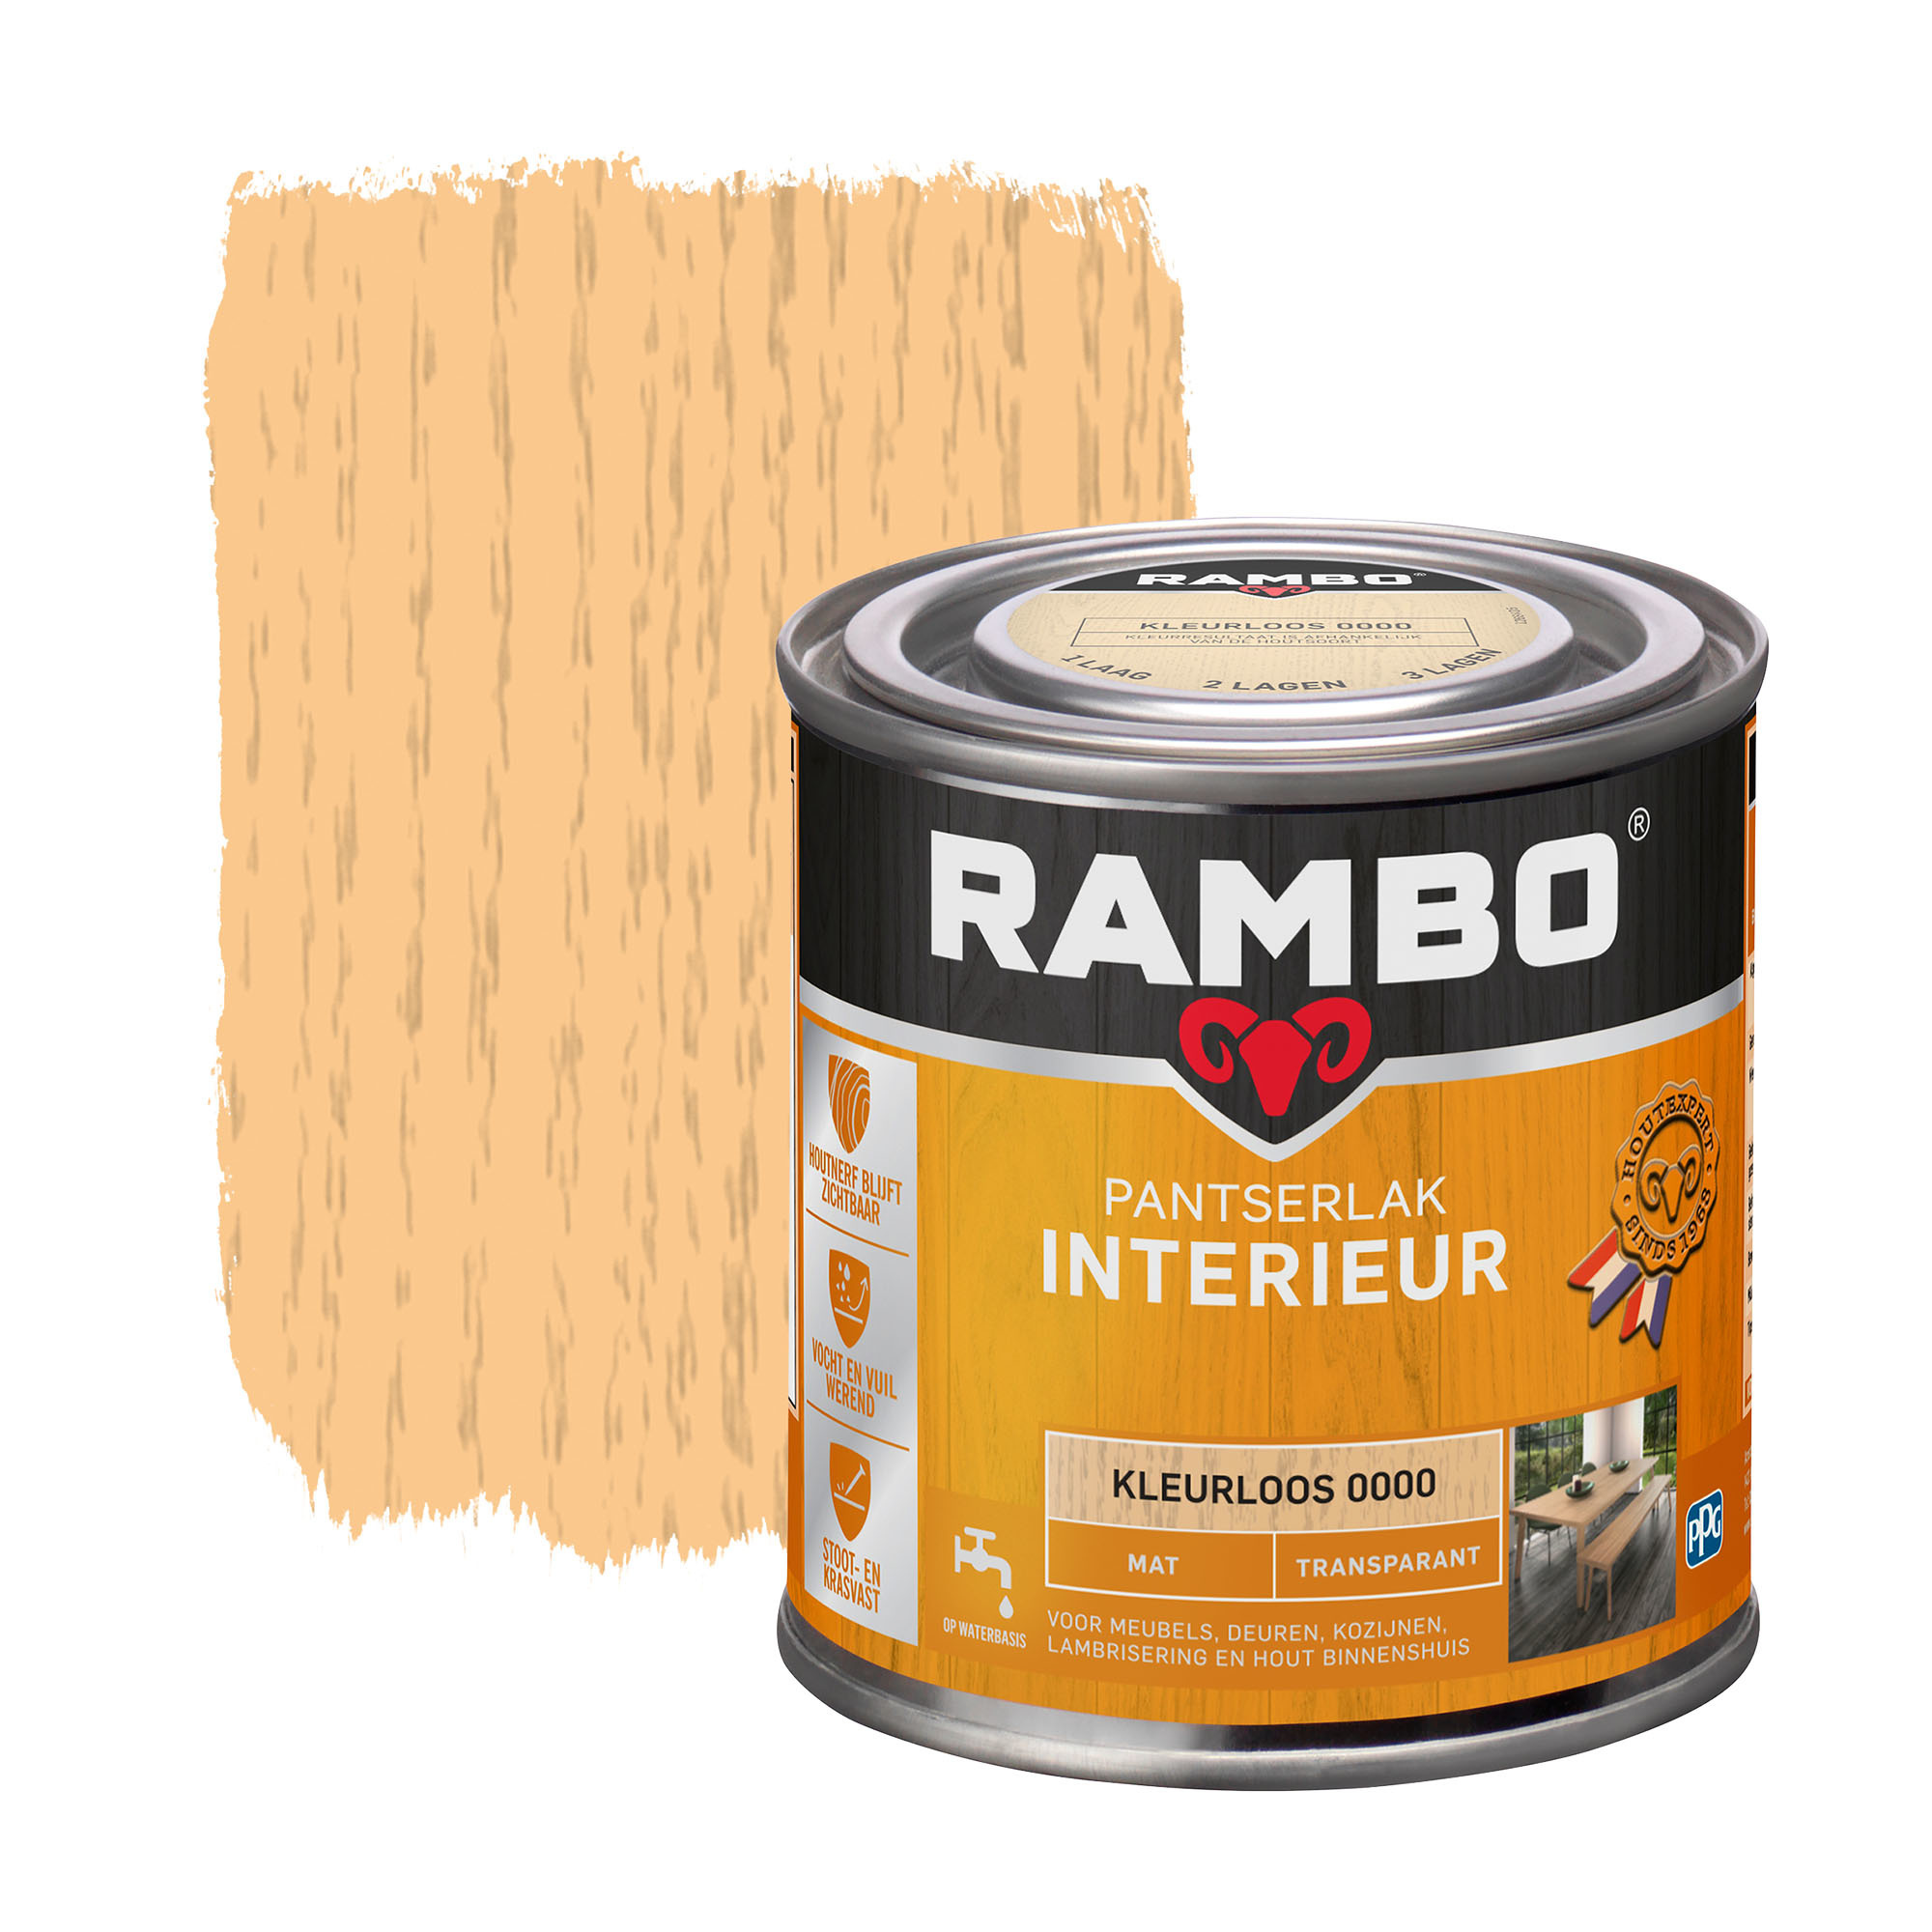 oven Rendezvous Karakteriseren Rambo Pantserlak Interieur Transparant Mat - Blank kopen? - De Verfzaak